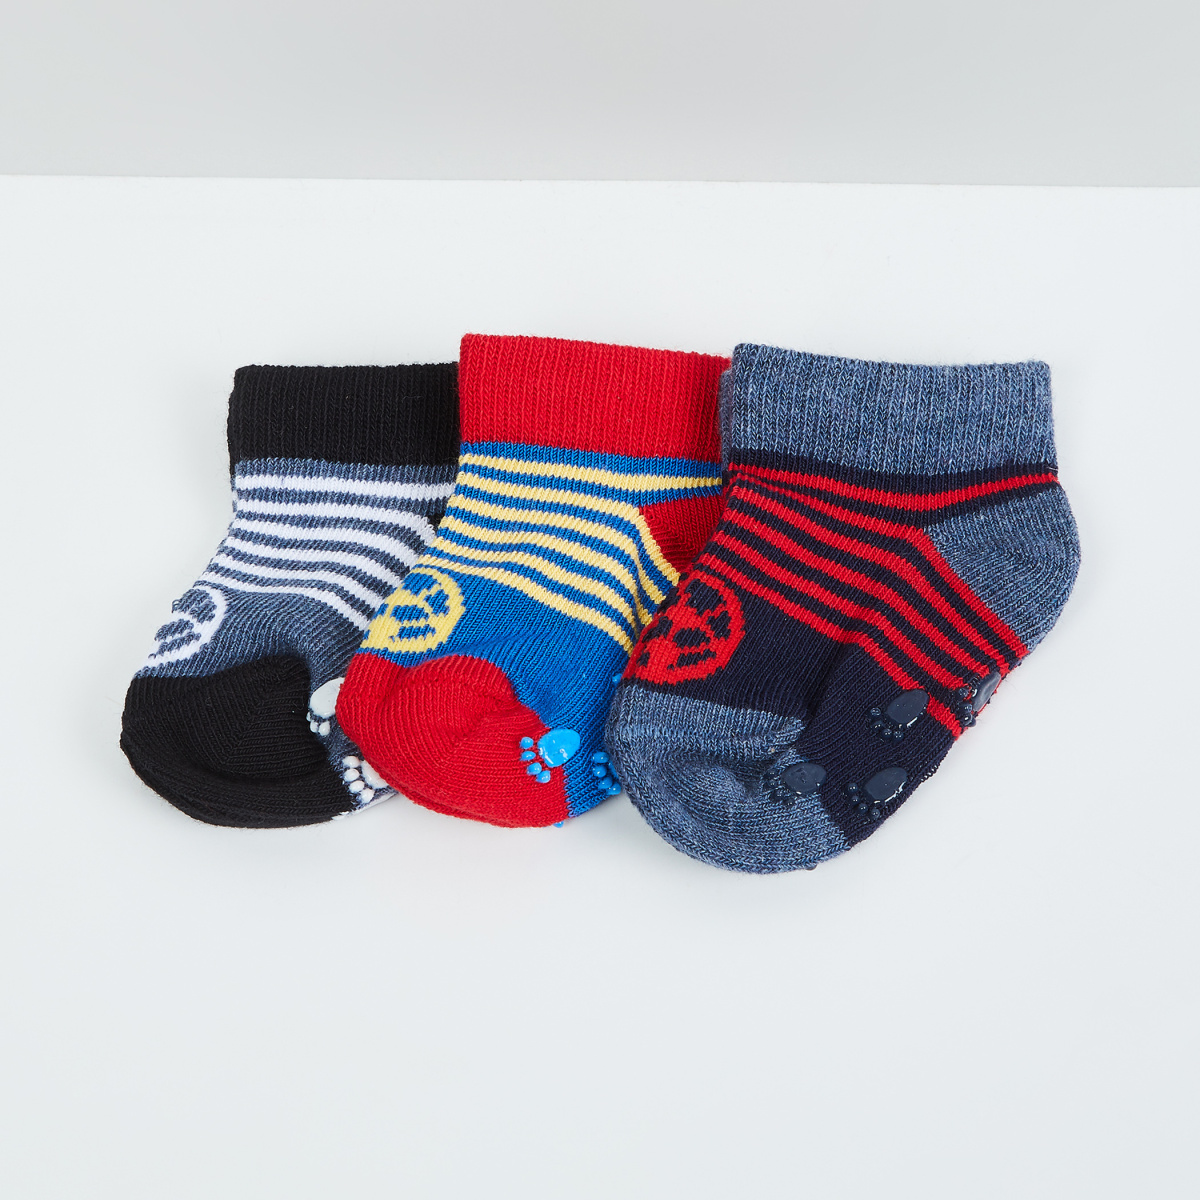 MAX Printed Ankle Length Socks - Pack of 3